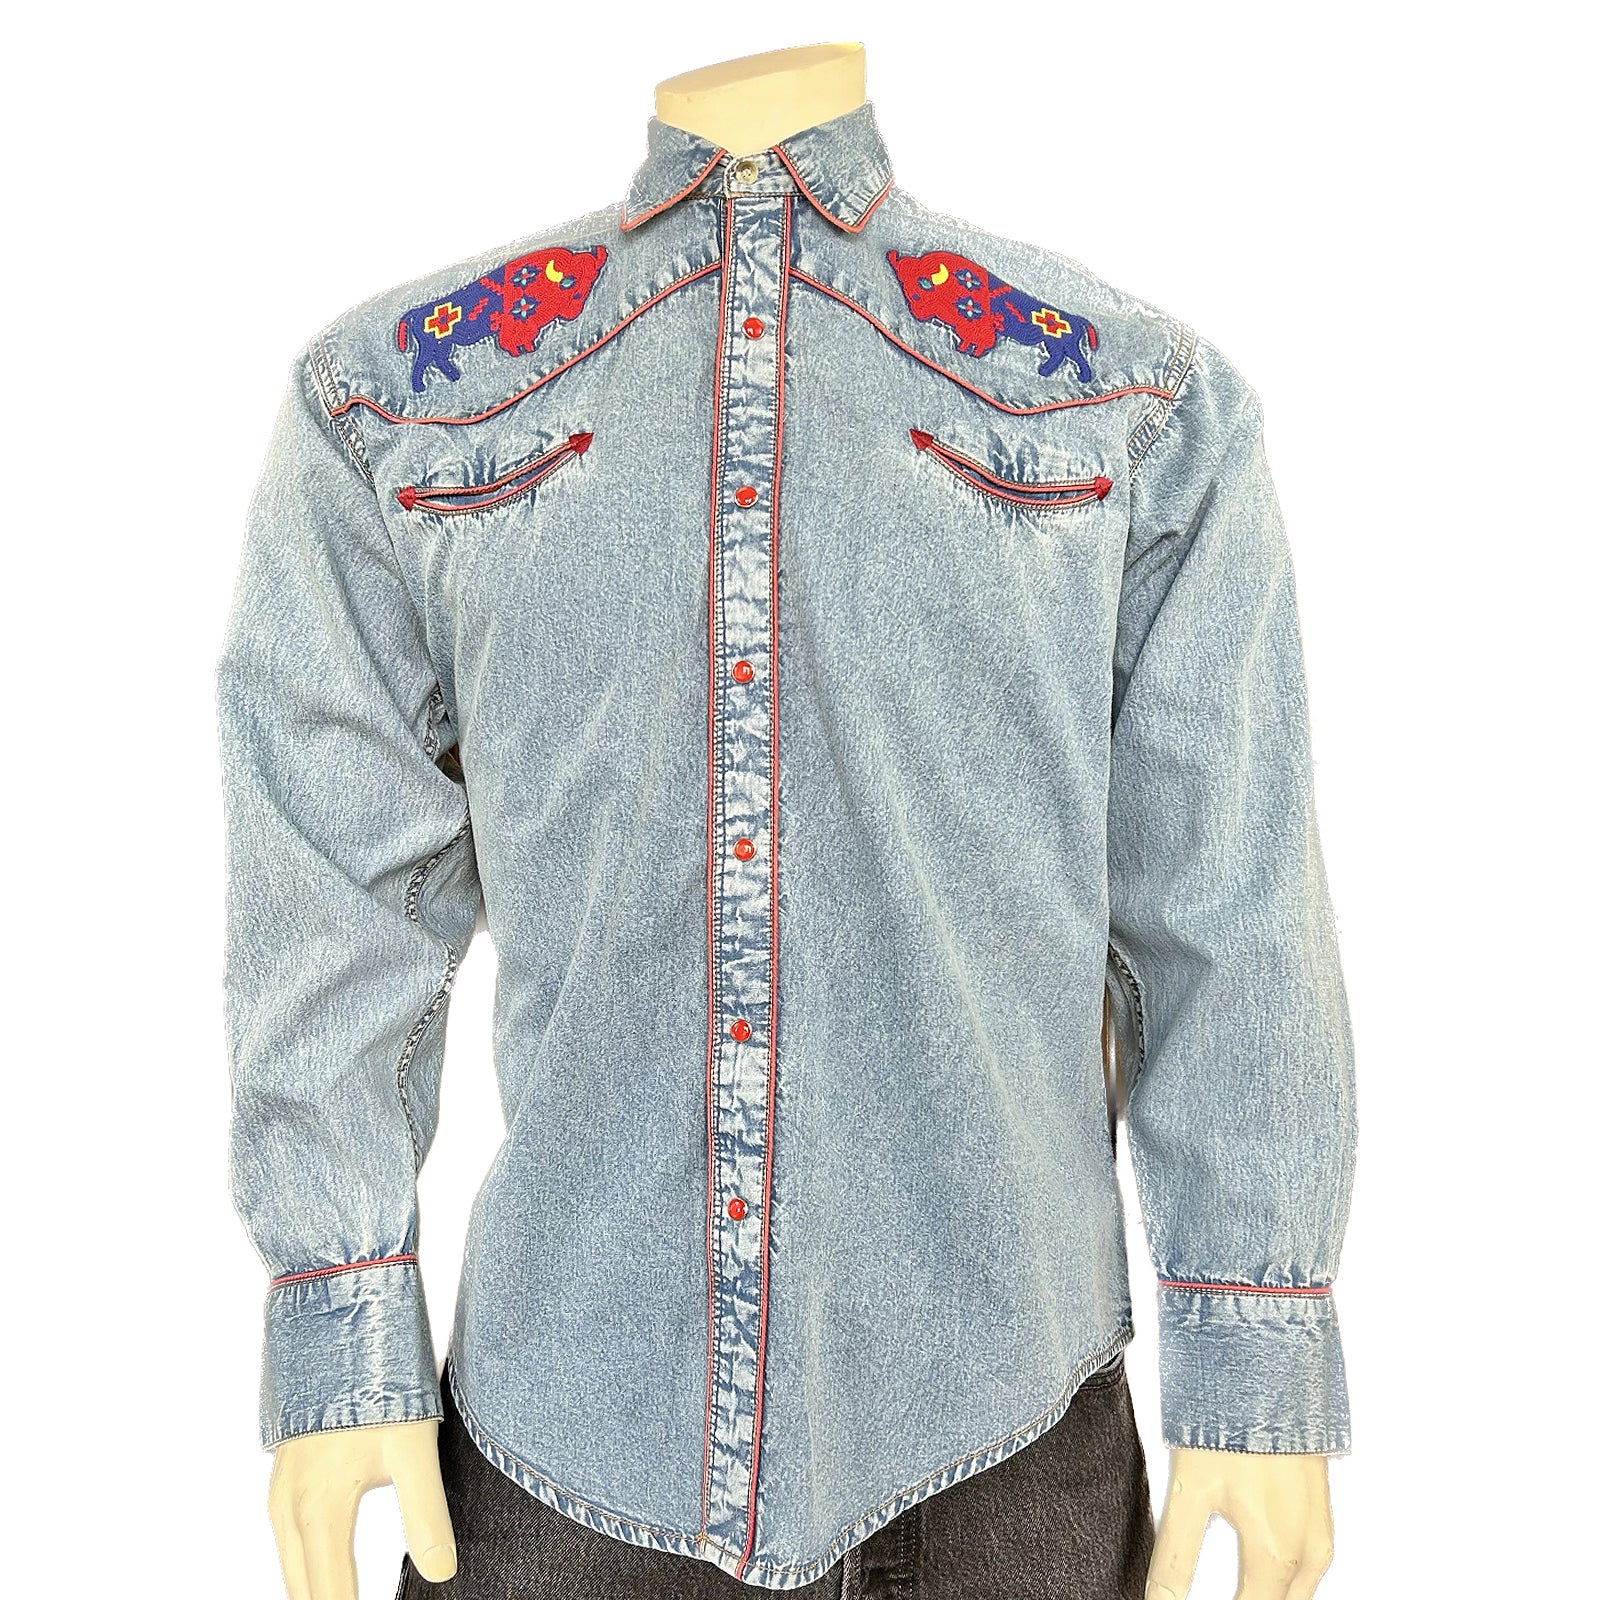 Rockmount Men’s Bison Embroidery Denim Western Shirt